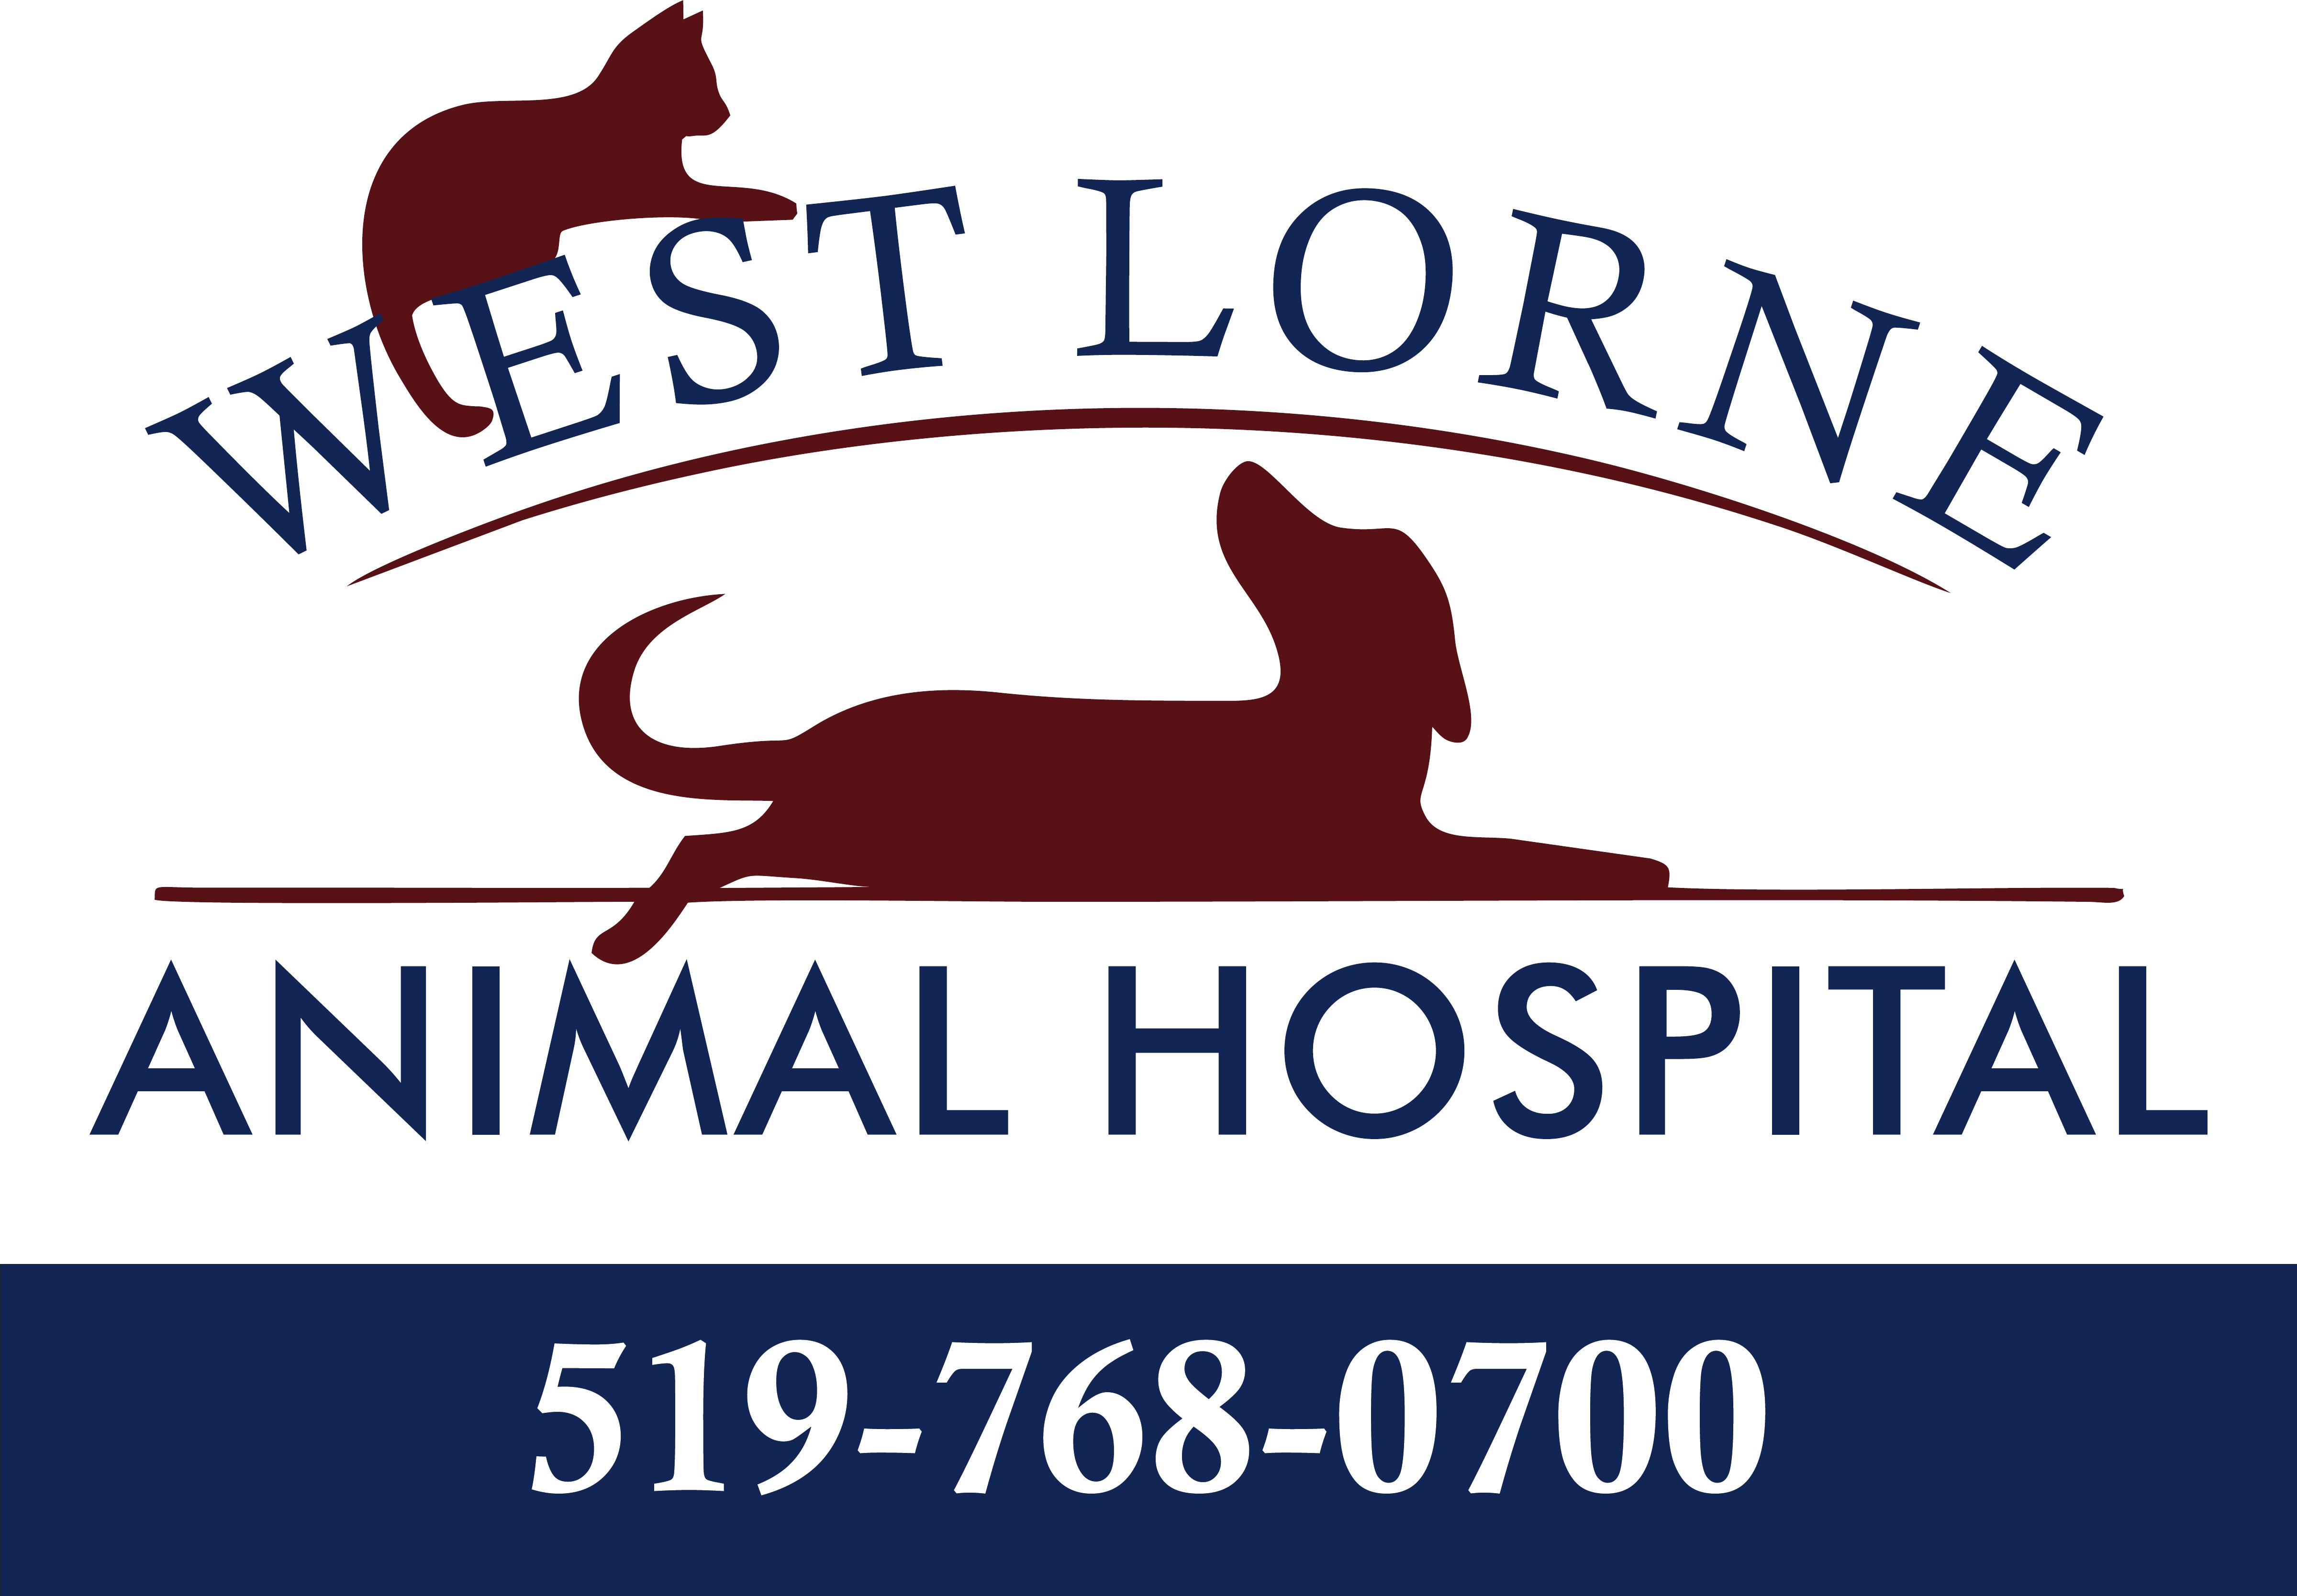 West Lorne Animal Hospital